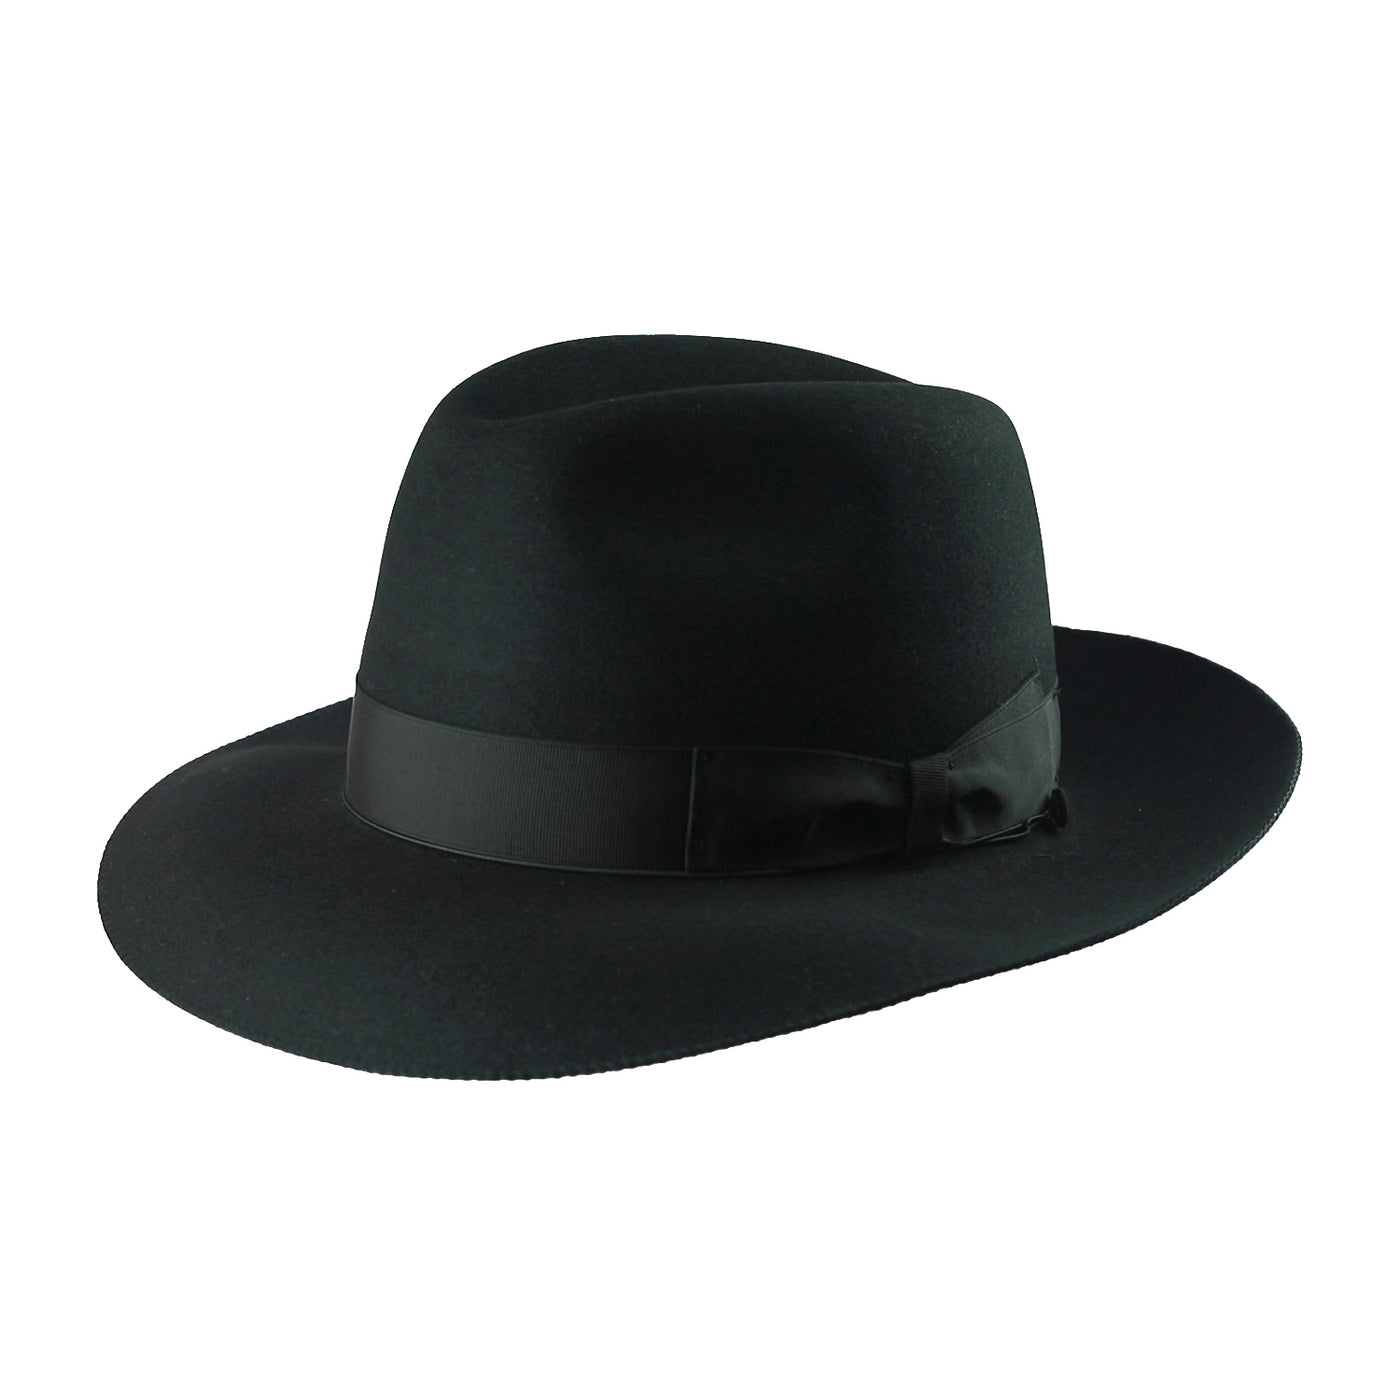 Armando 278 - Black, product_type] - Borsalino for Atica fedora hat